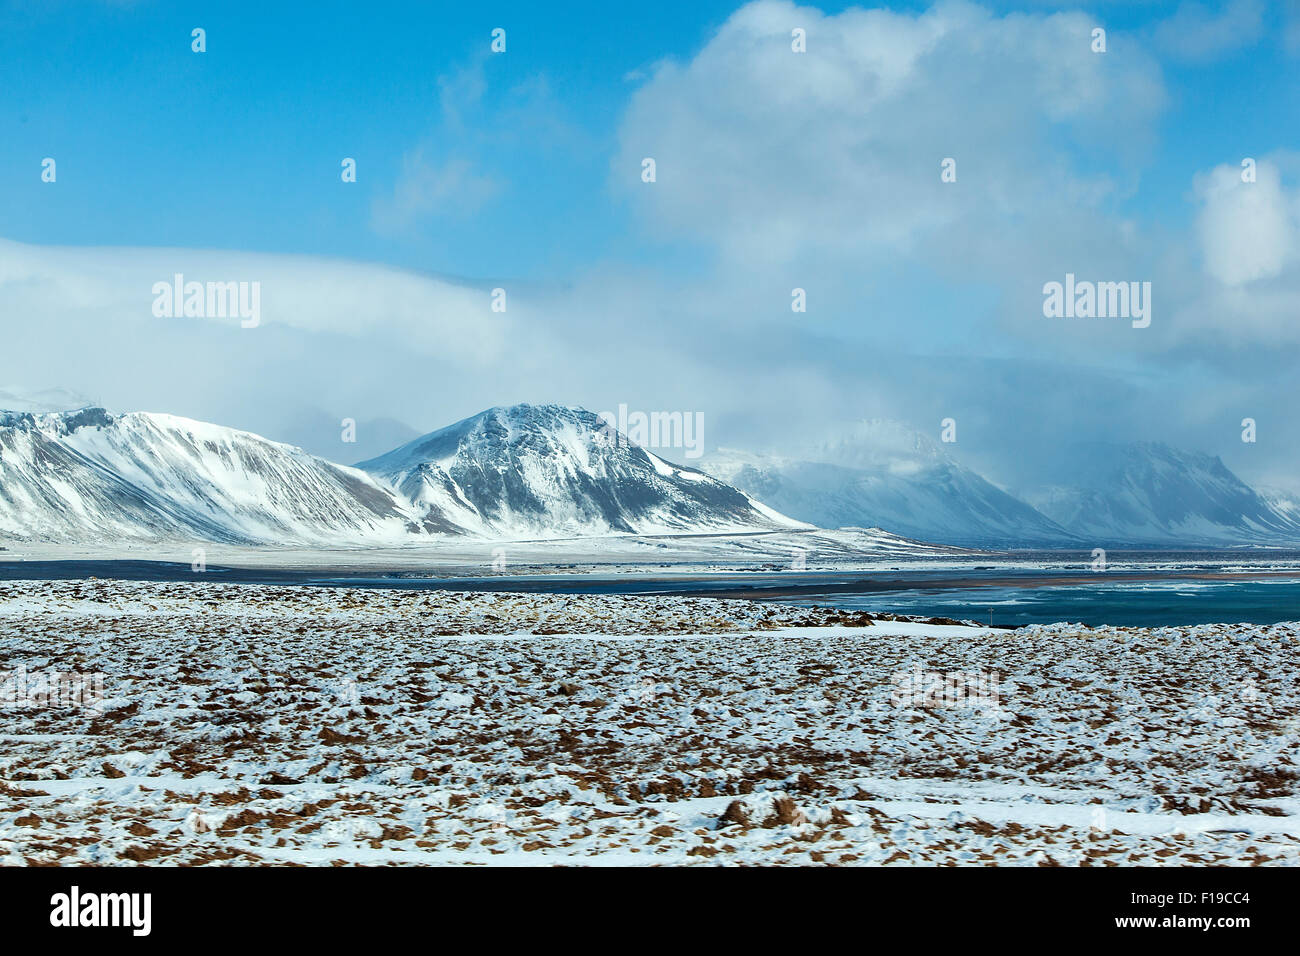 Impressive winter mountain landscape in Iceland Stock Photo